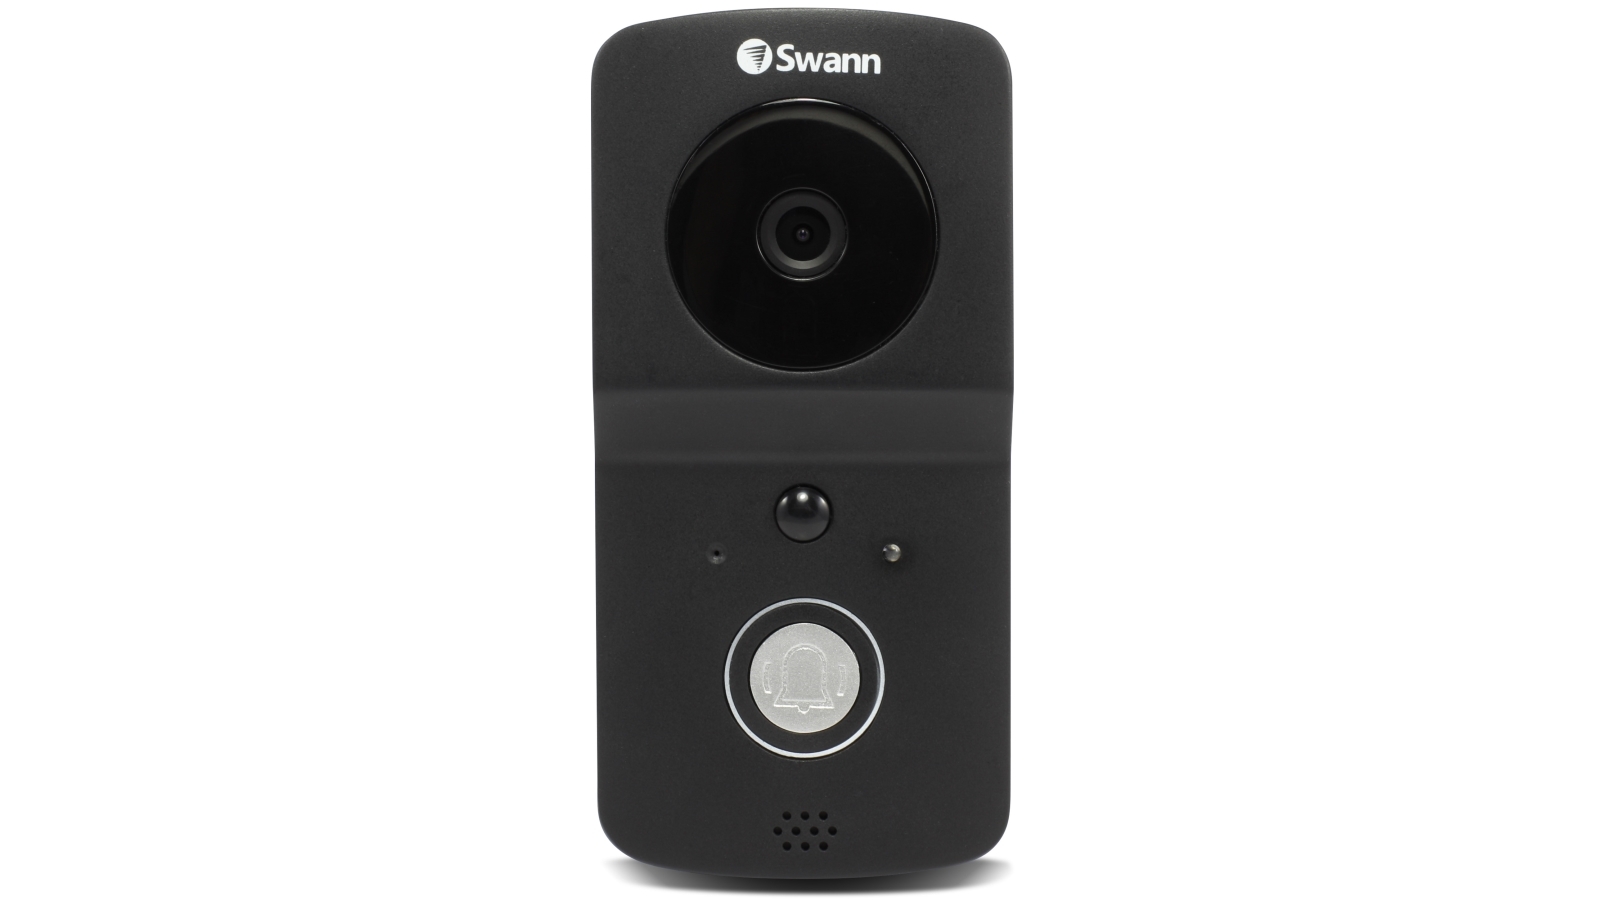 swann smart video doorbell review